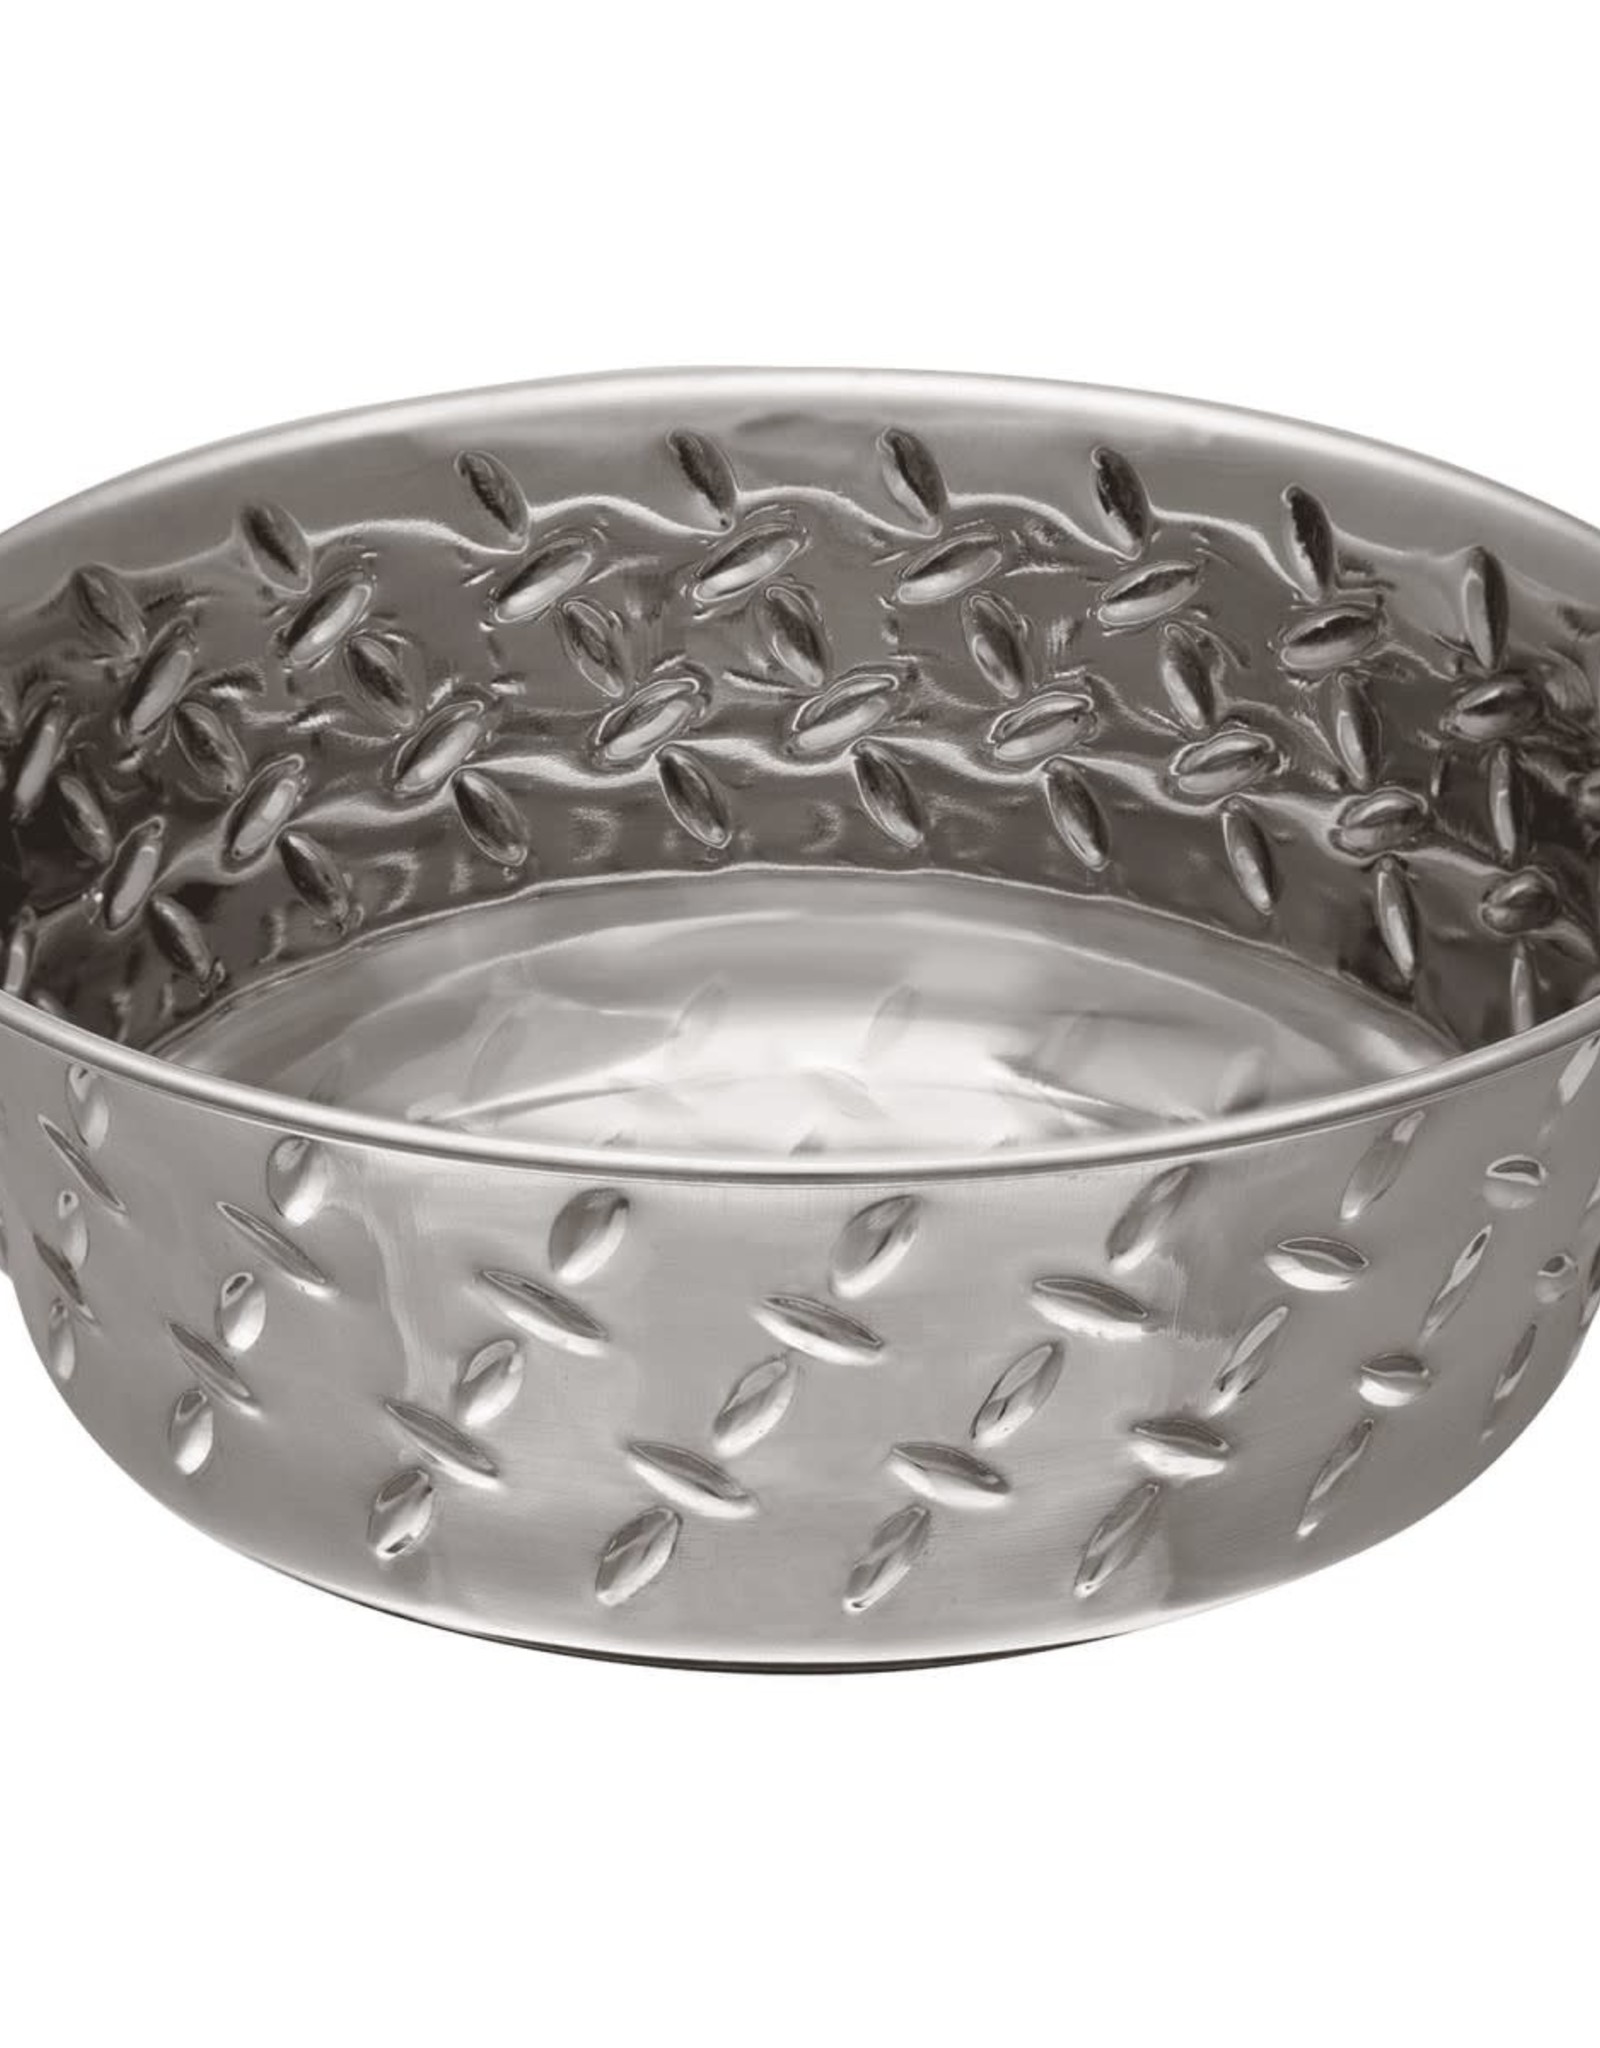 LOVING PET Diamond Plated Dog Bowl with Non-Skid Bottom, 1-Pint